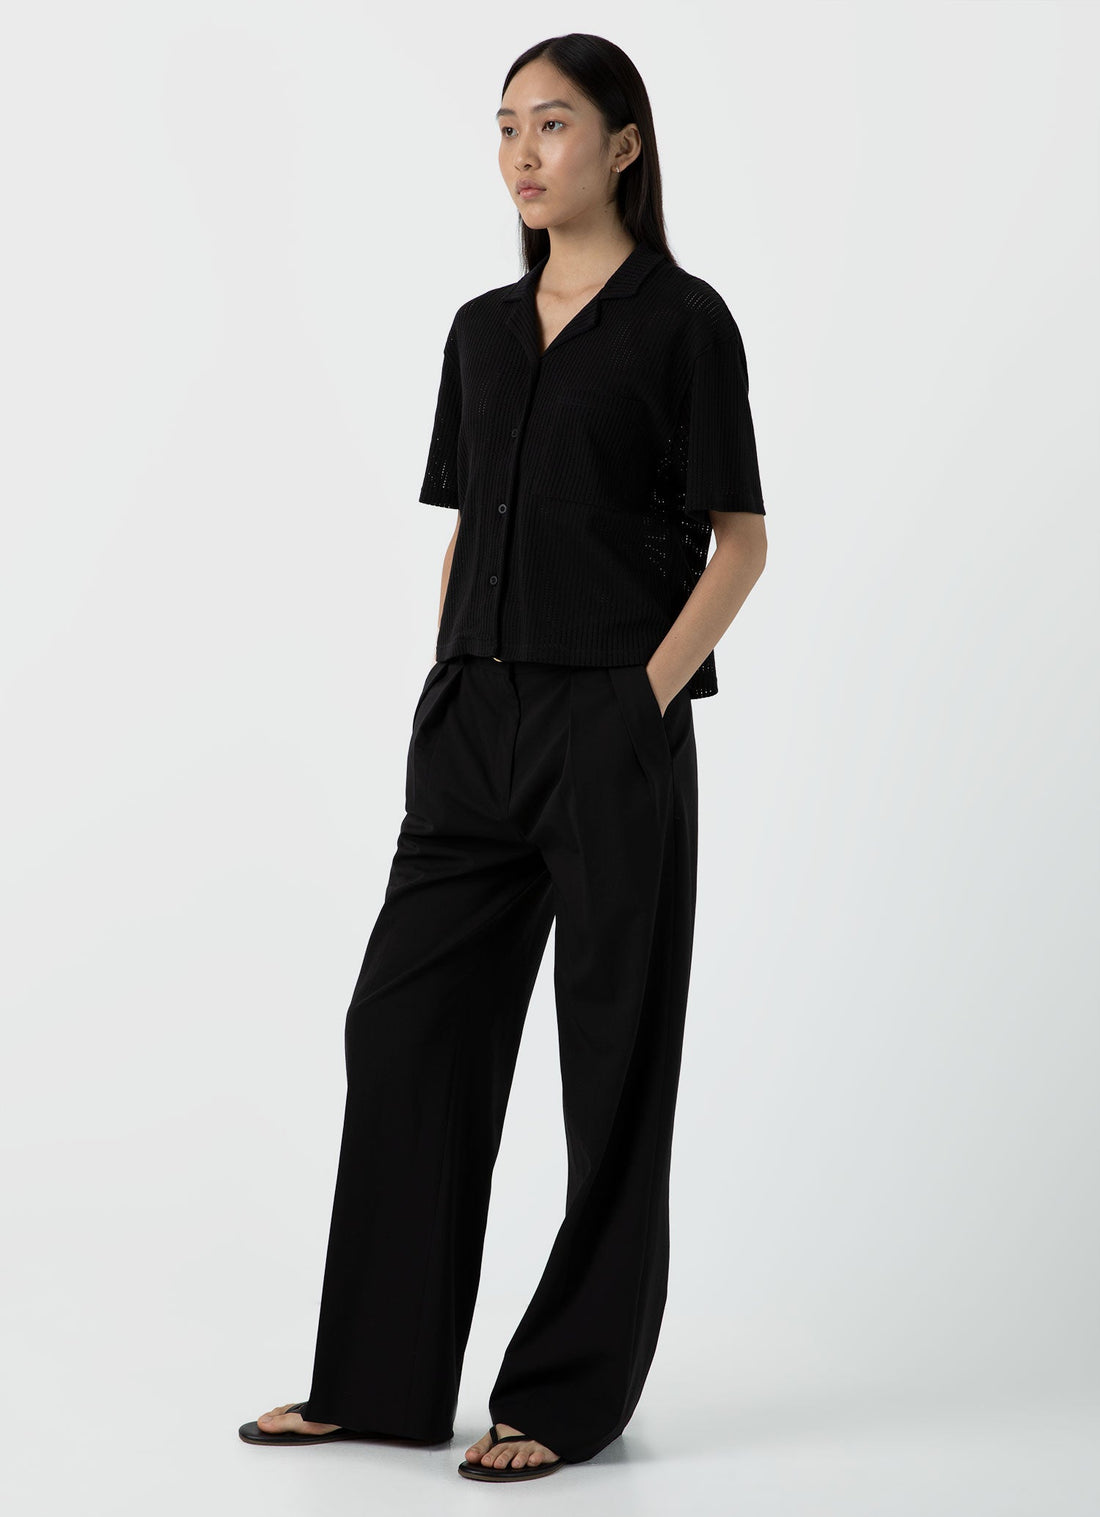 Women Mulberry Silk Cotton Thermal Underwear/leggings, 6 Colors/ Long  Sleeve Shirt/high Waist Leggings/ Lounge Wear/workout Outfits -  Denmark